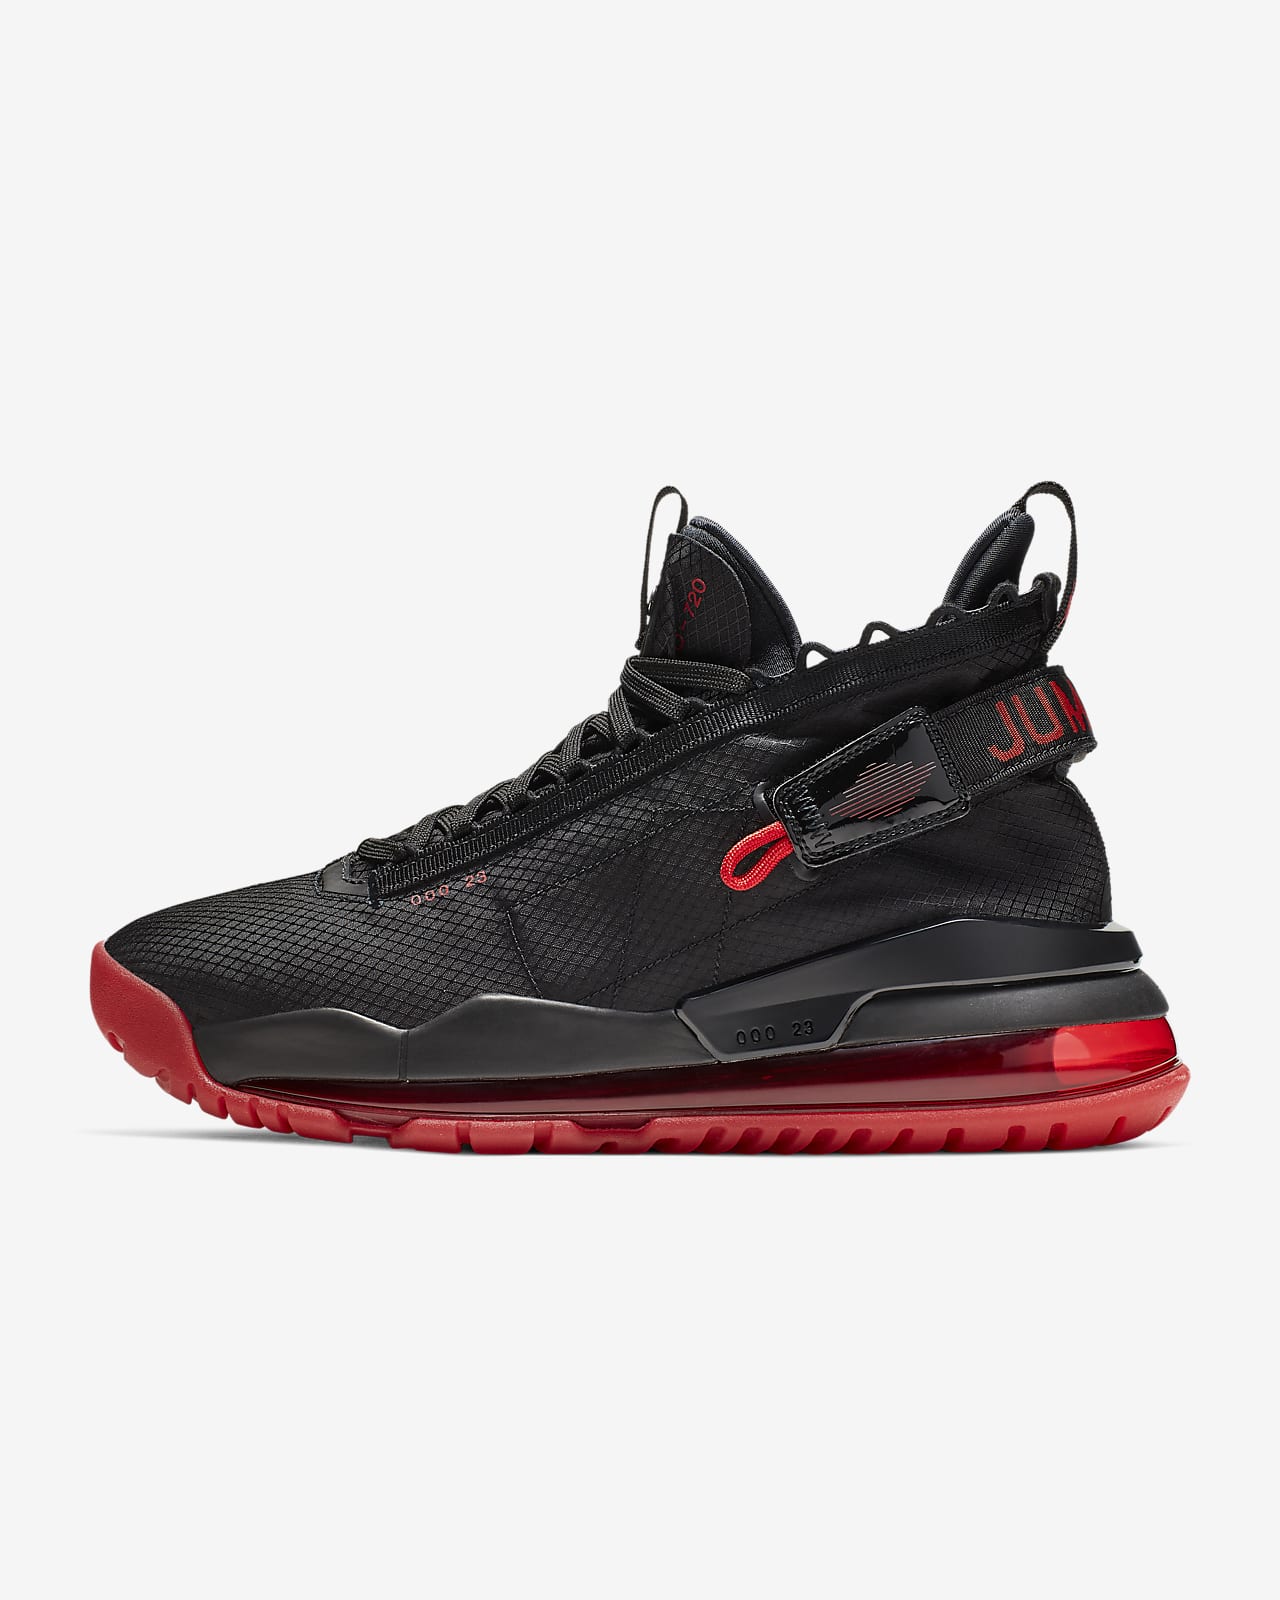 Jordan Proto-Max 720 鞋款。Nike TW